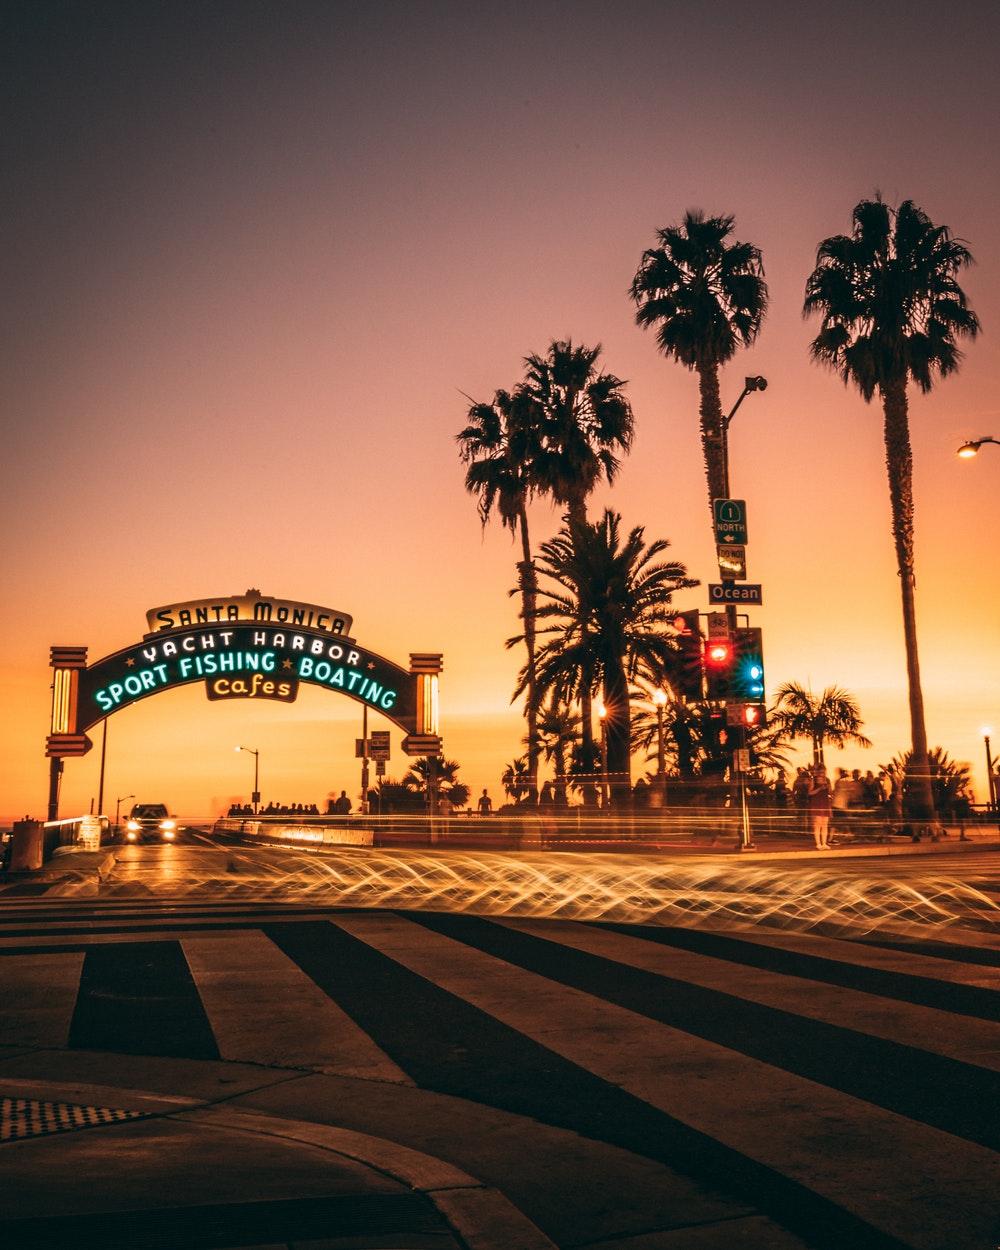 Santa Monica Picture. Download Free Image